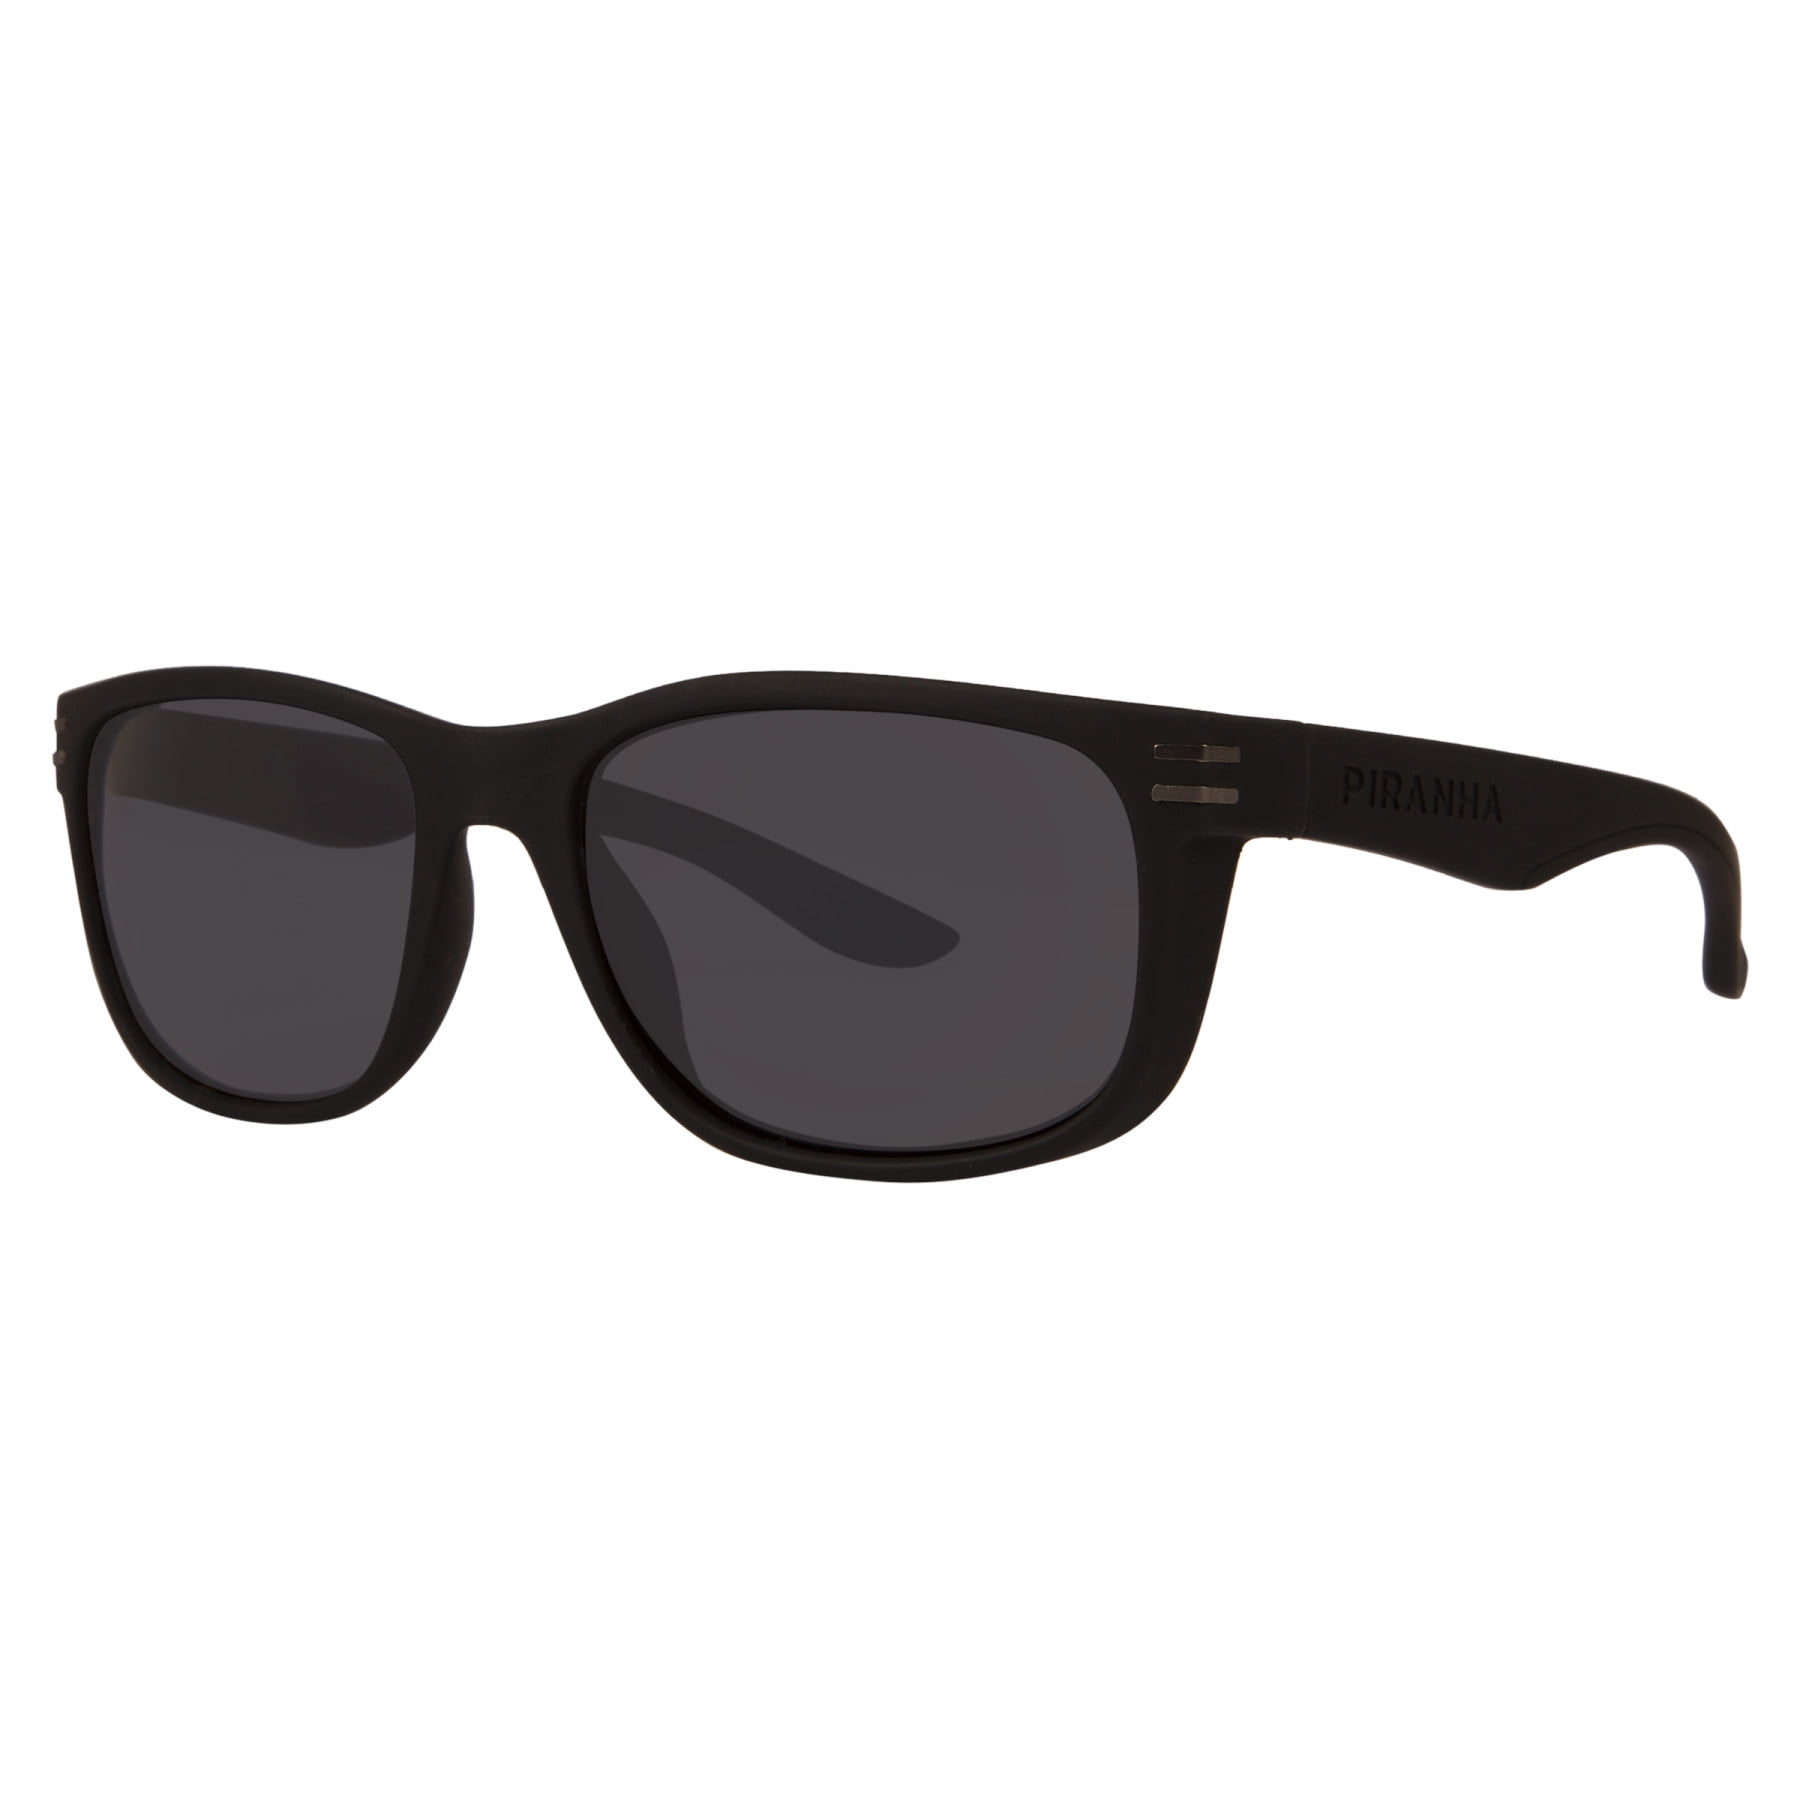 Piranha Reset Hydrofloat Black Frame Sunglasses with Smoke